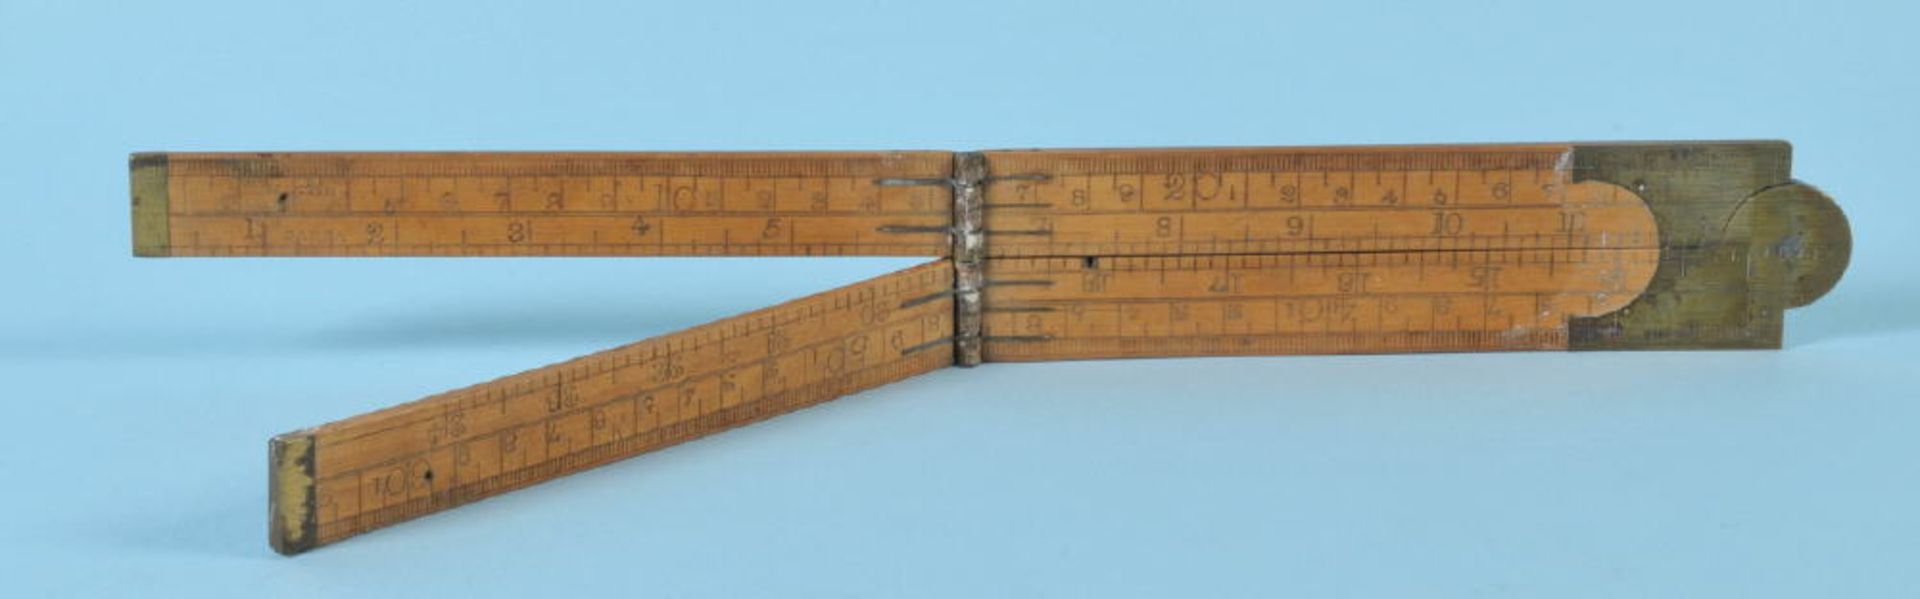 ZollstockHolz, Messingmontierung, L= 62,5 cm, um 1900